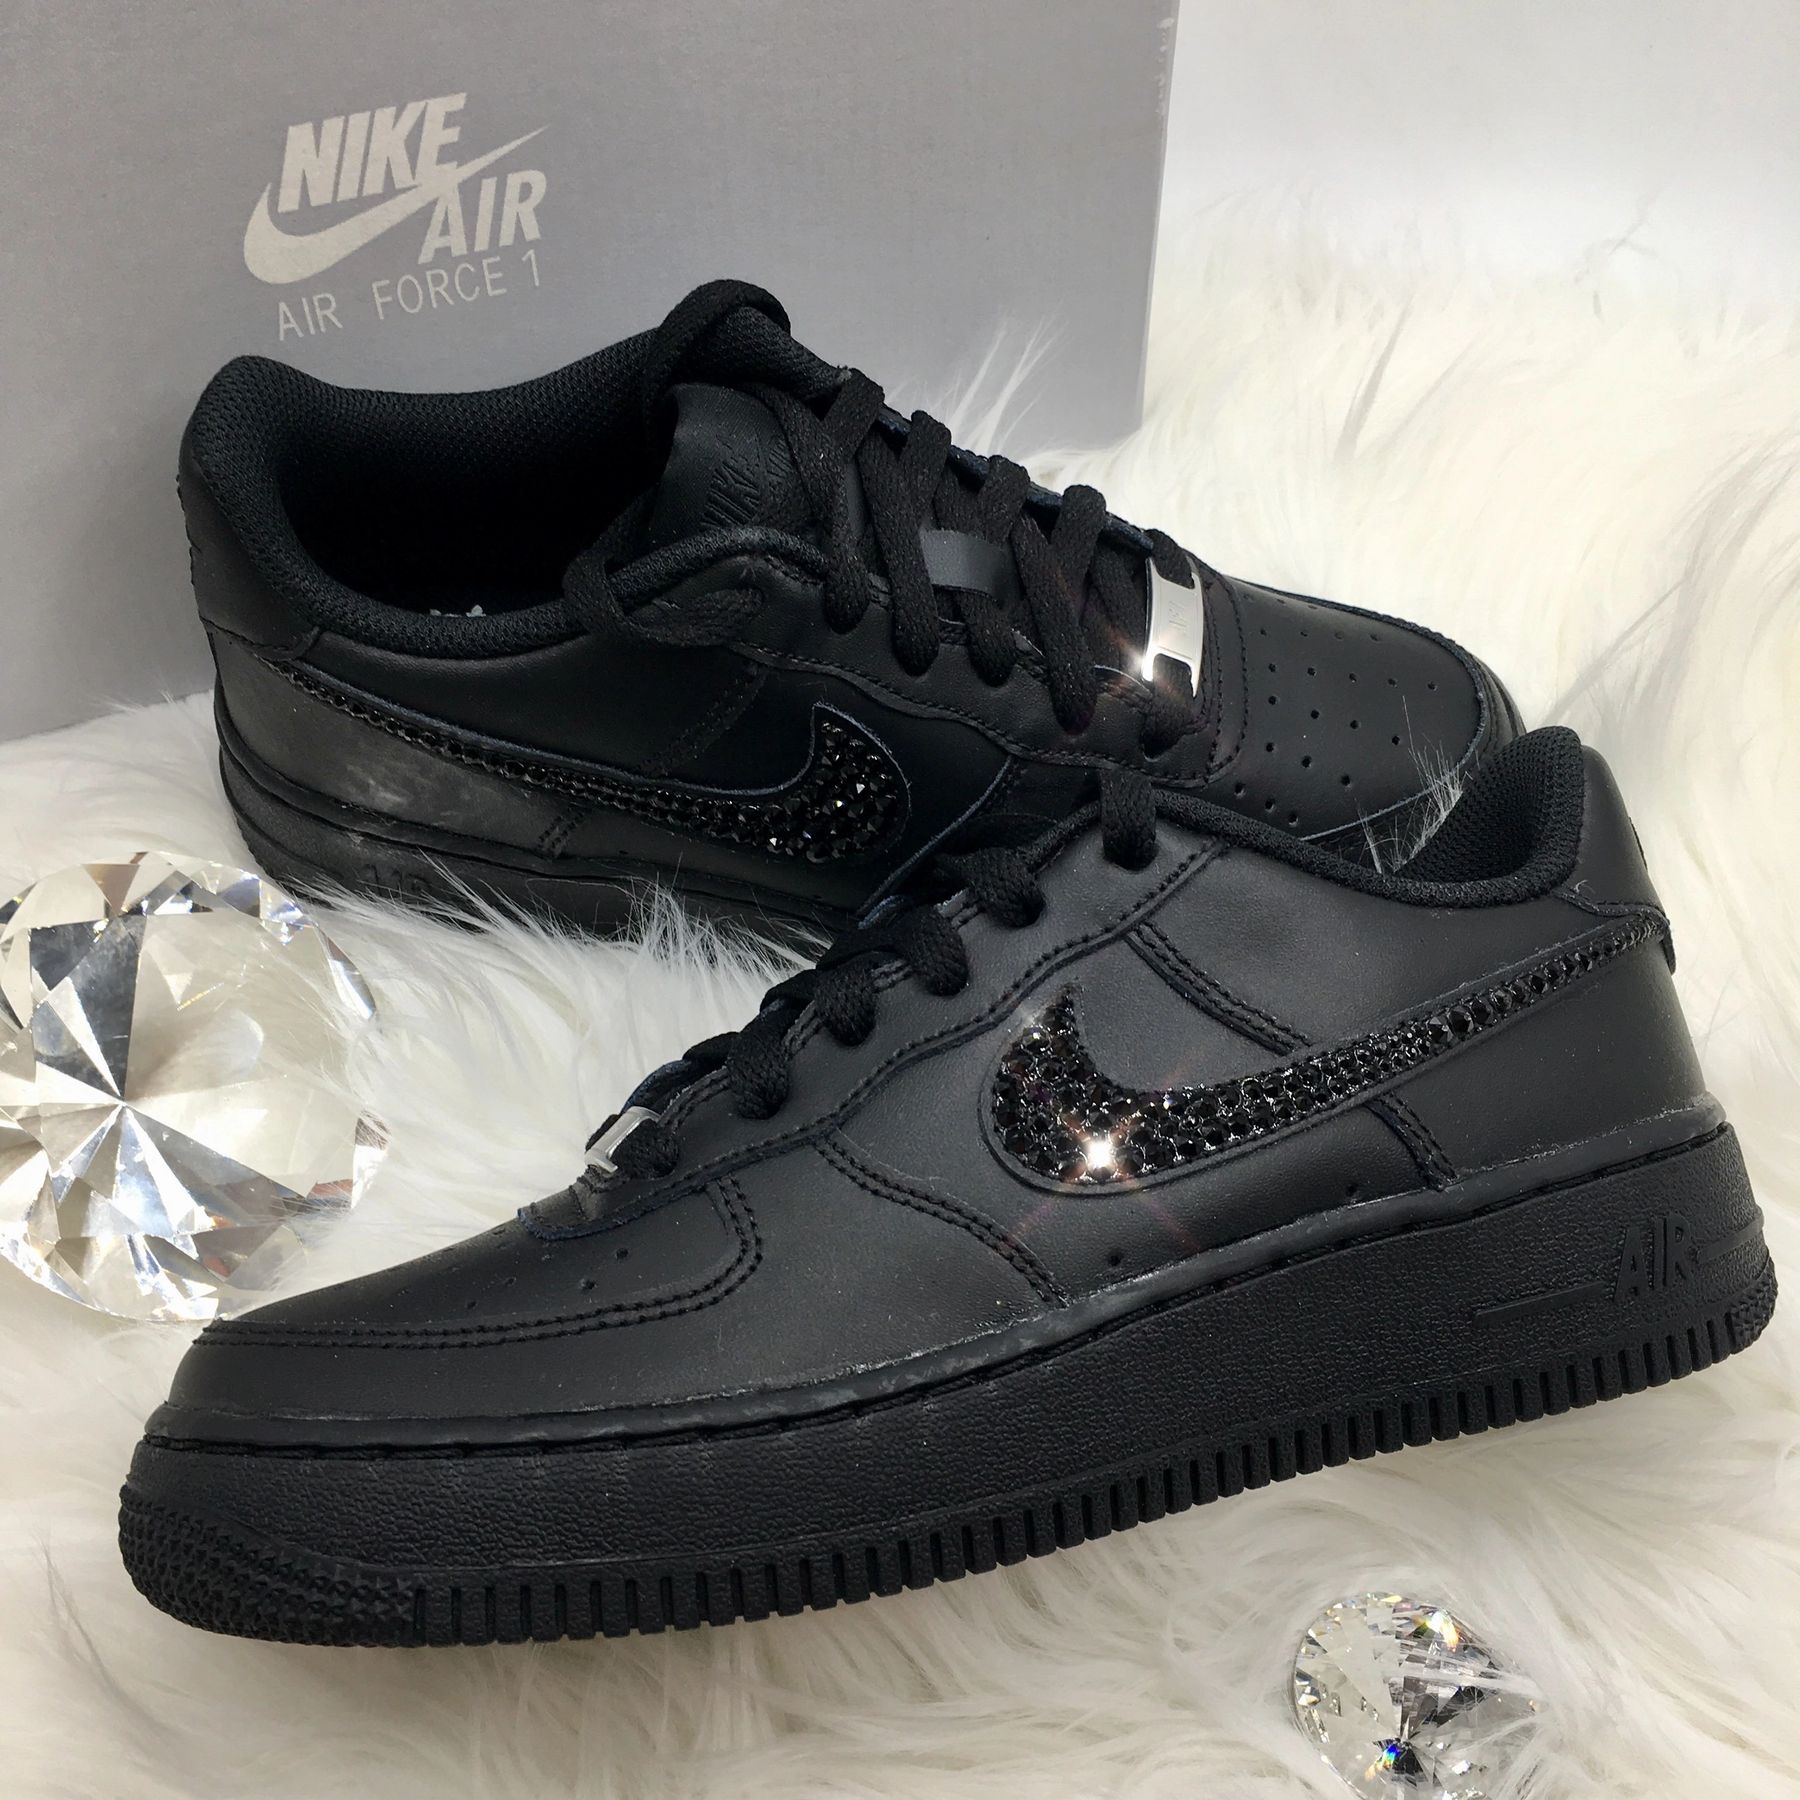 Valle triste Los Alpes Swarovski Bling Nike Air Force 1 Shoes - Low - Black with Black Rhinestones